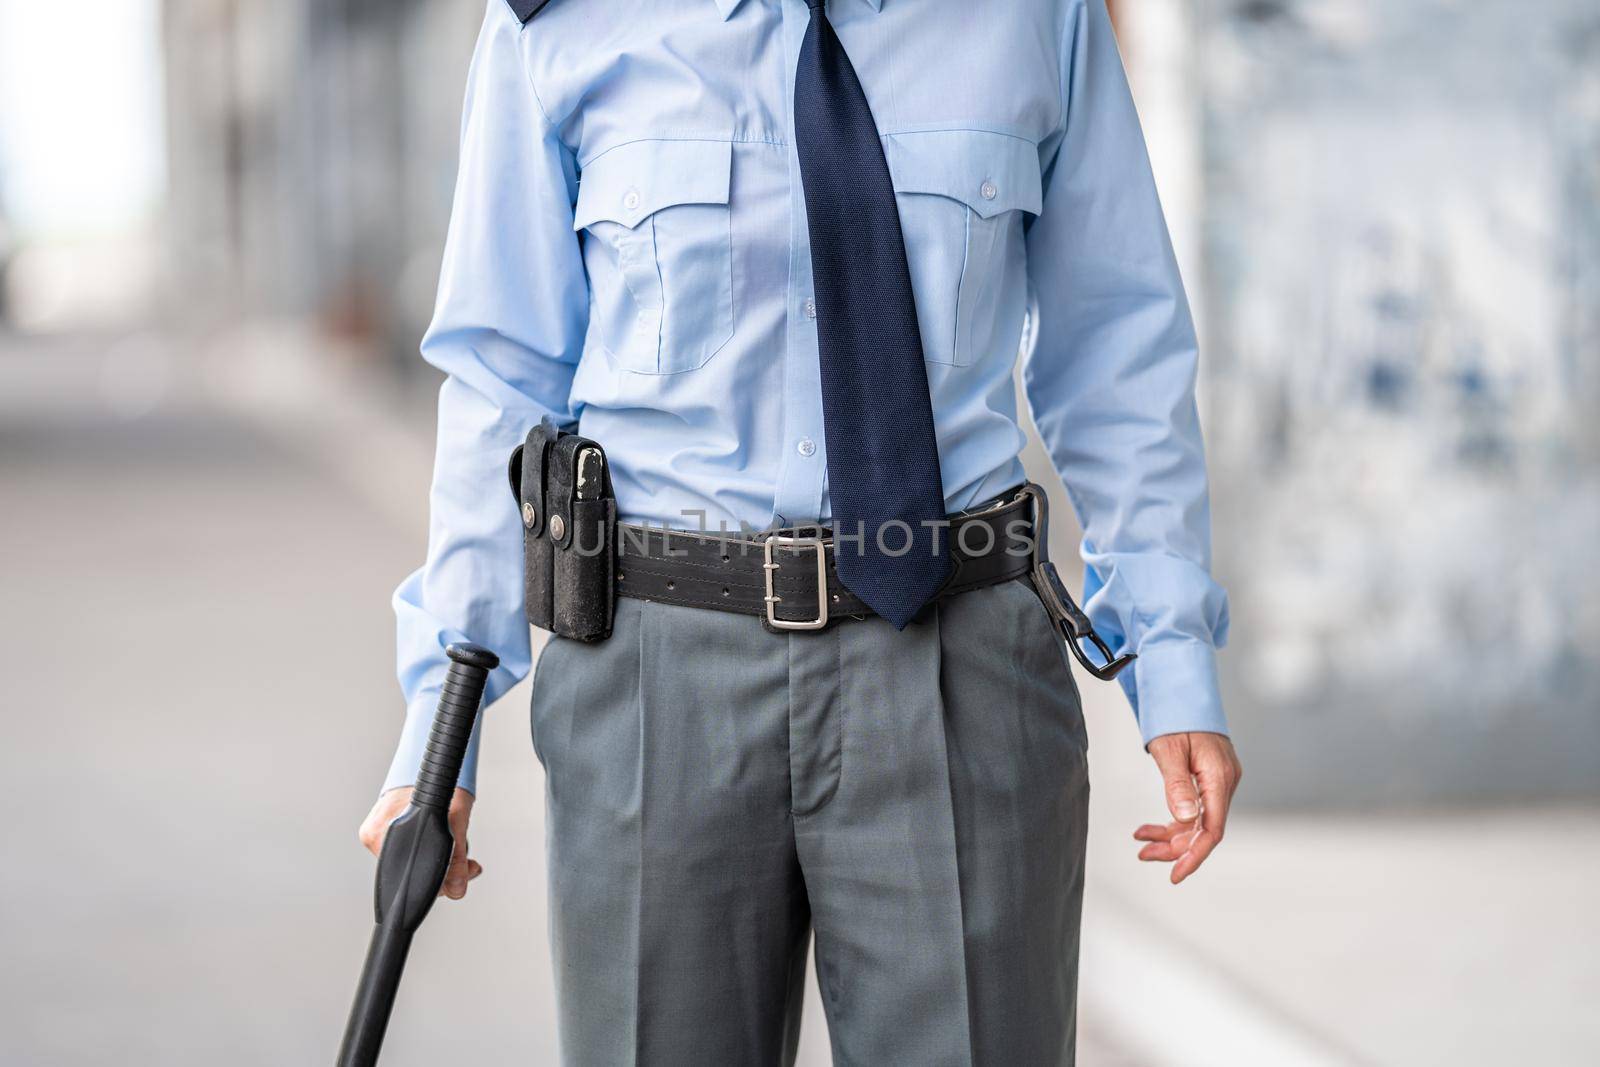 policeman with a baton on a city street by Edophoto